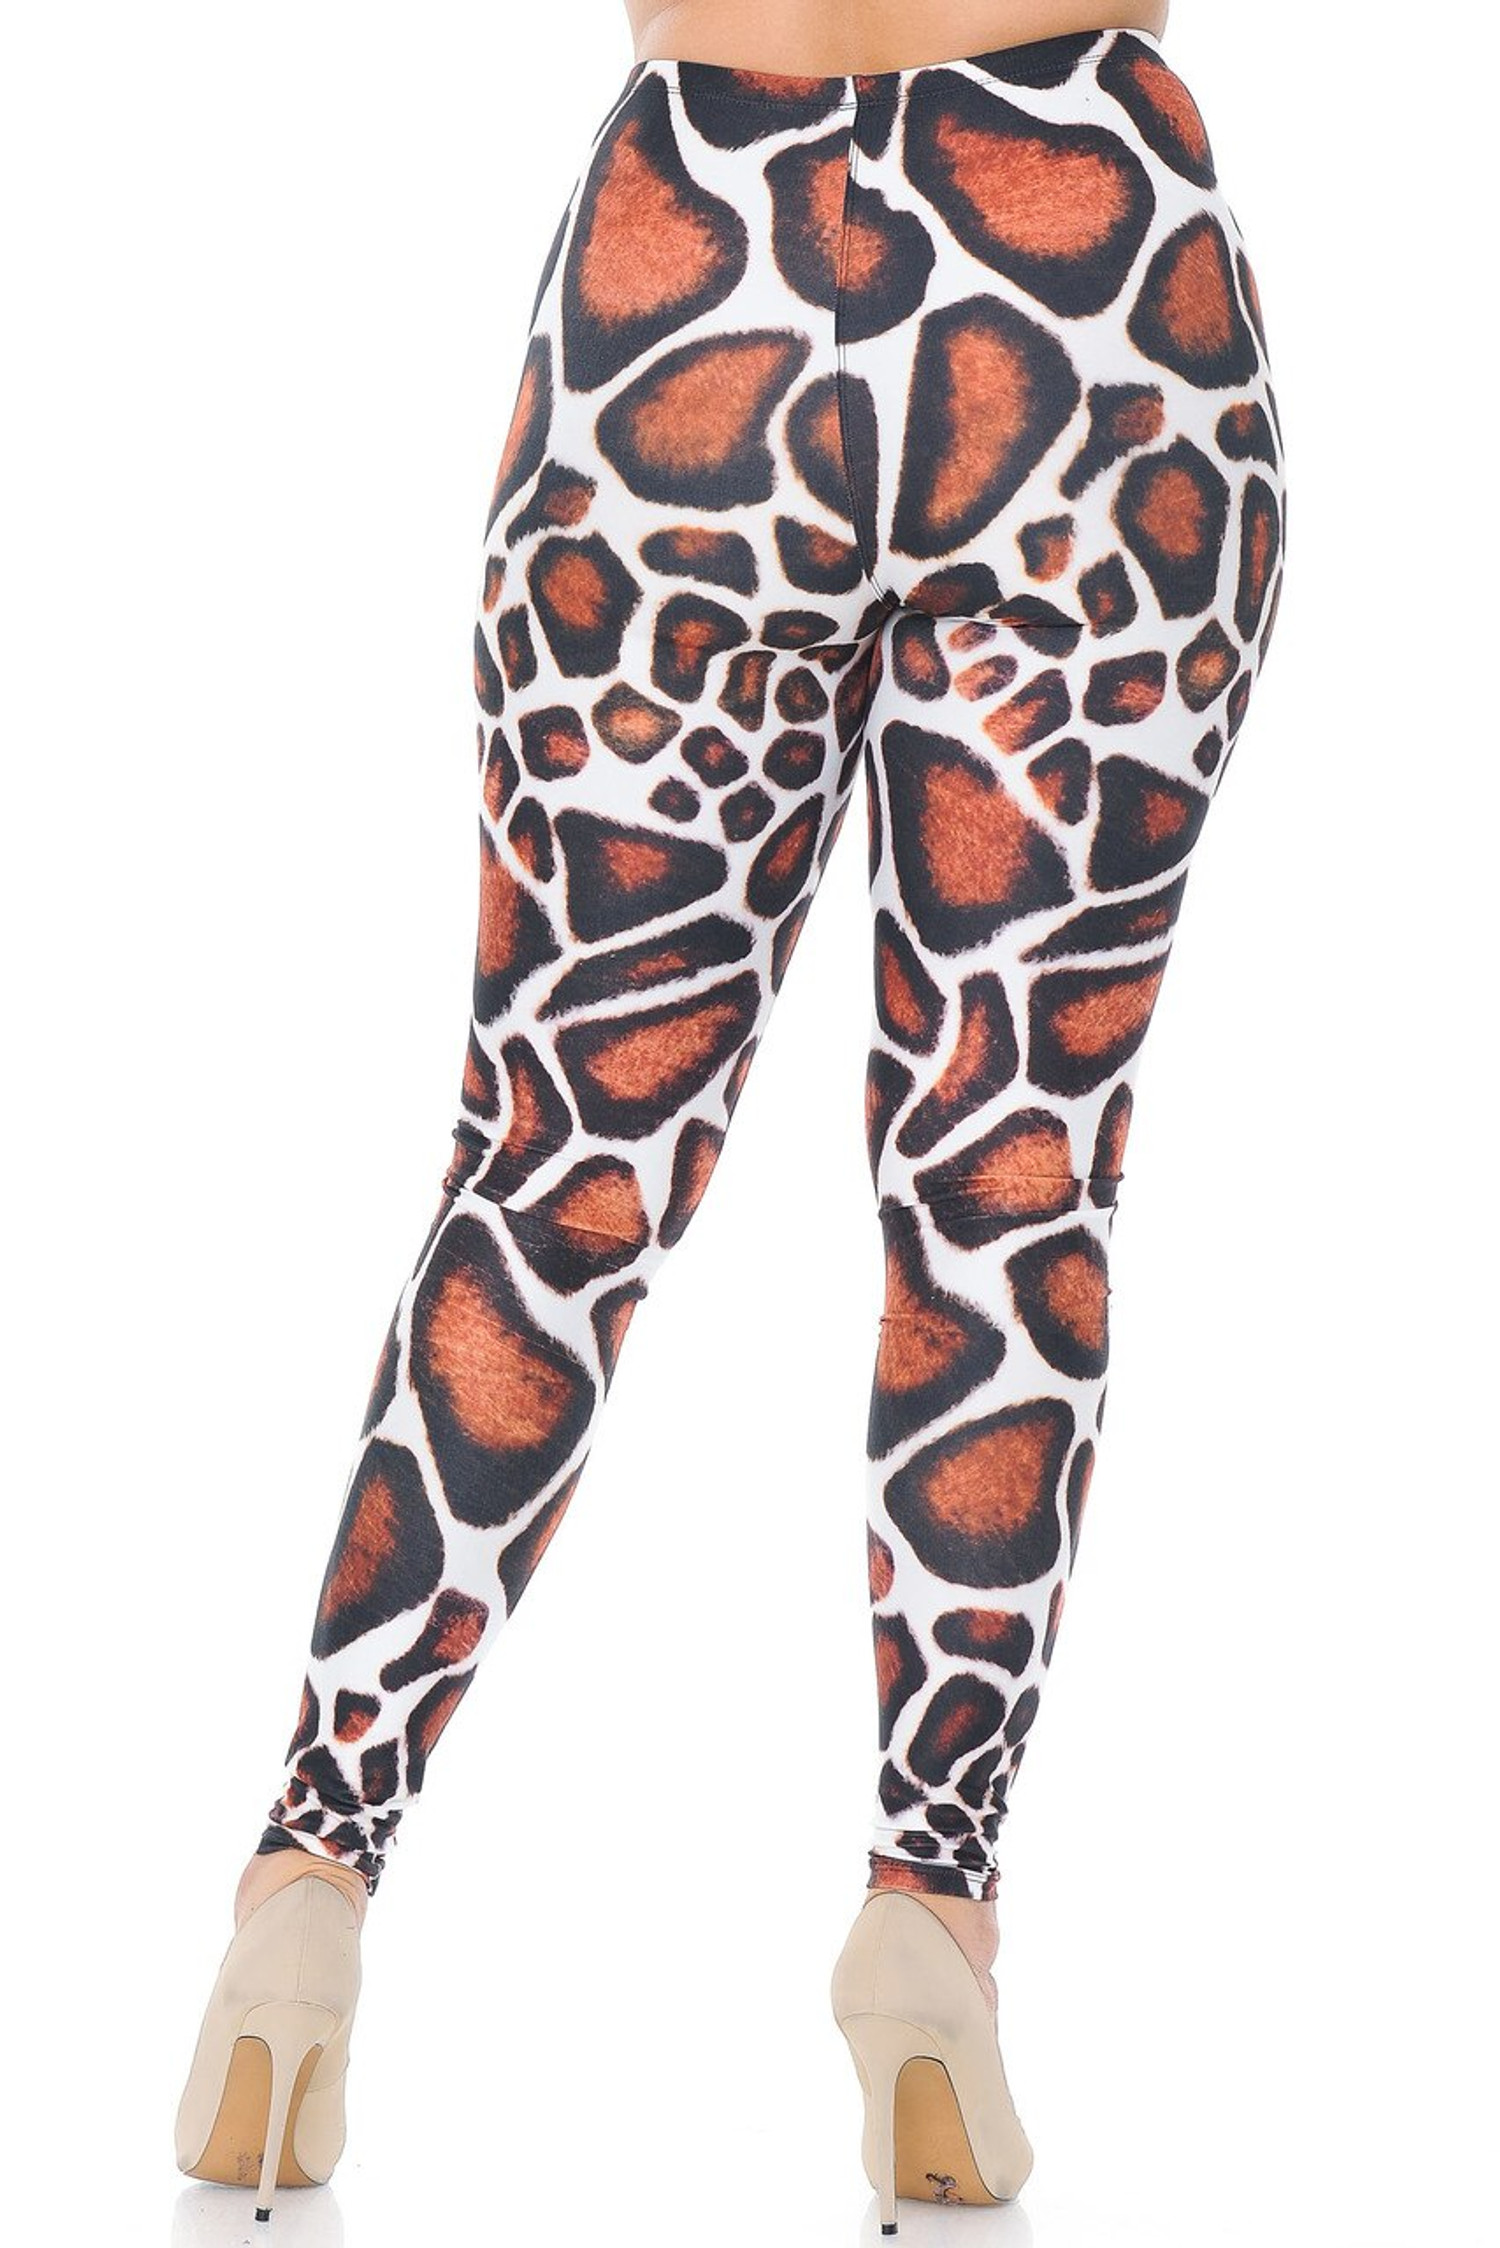 Creamy Soft Giraffe Print Plus Size Leggings - USA Fashion™